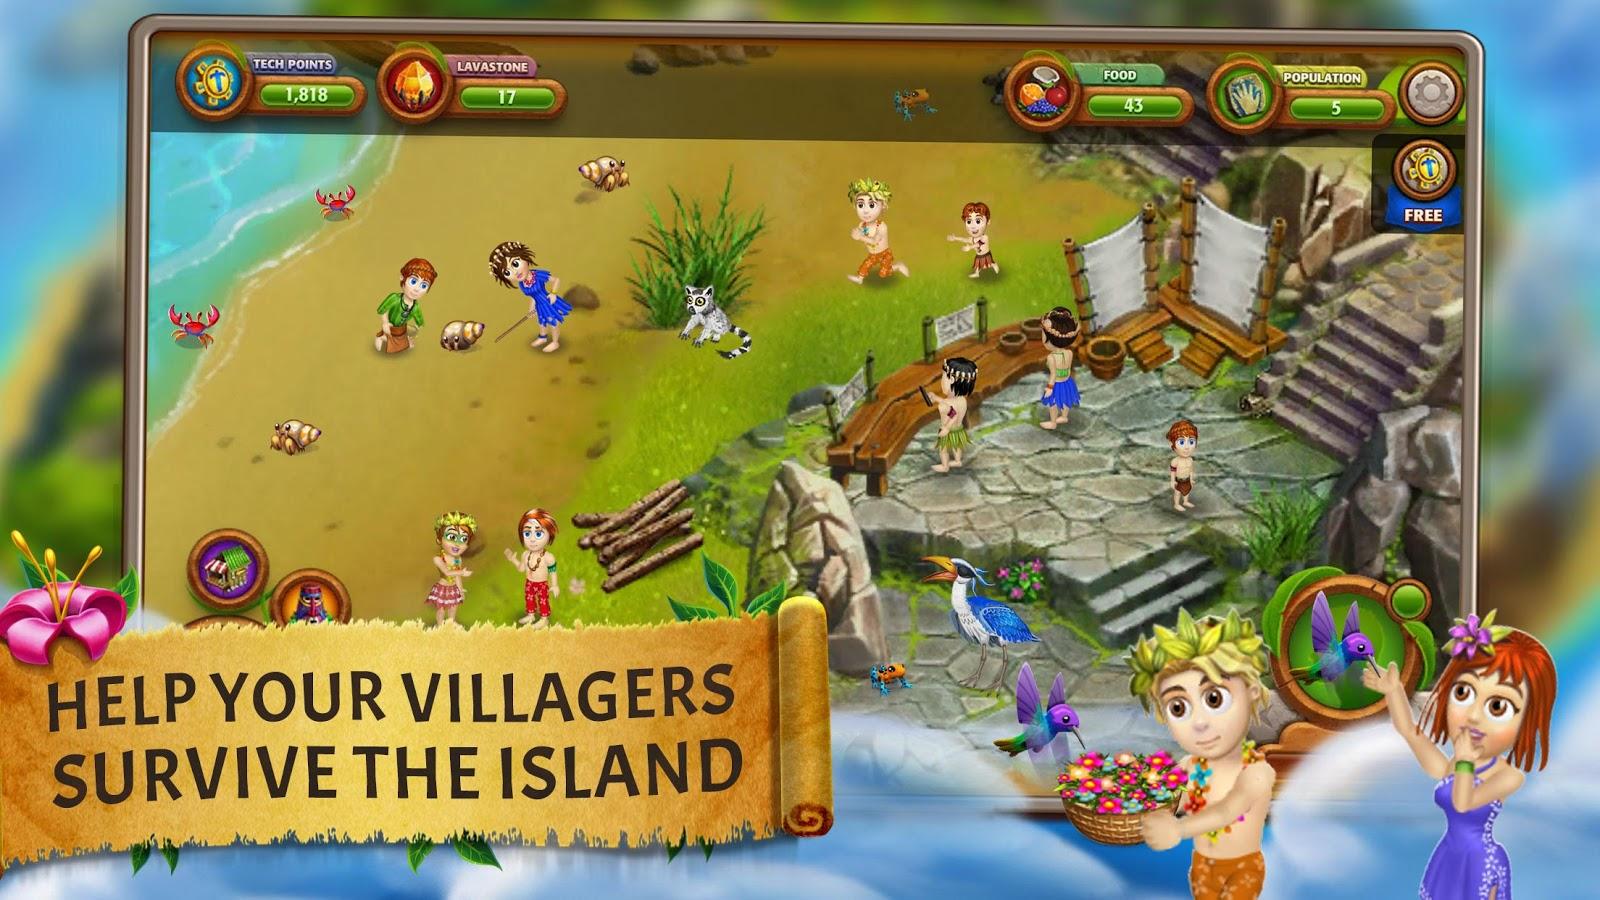 virtual villagers origins 2 garden